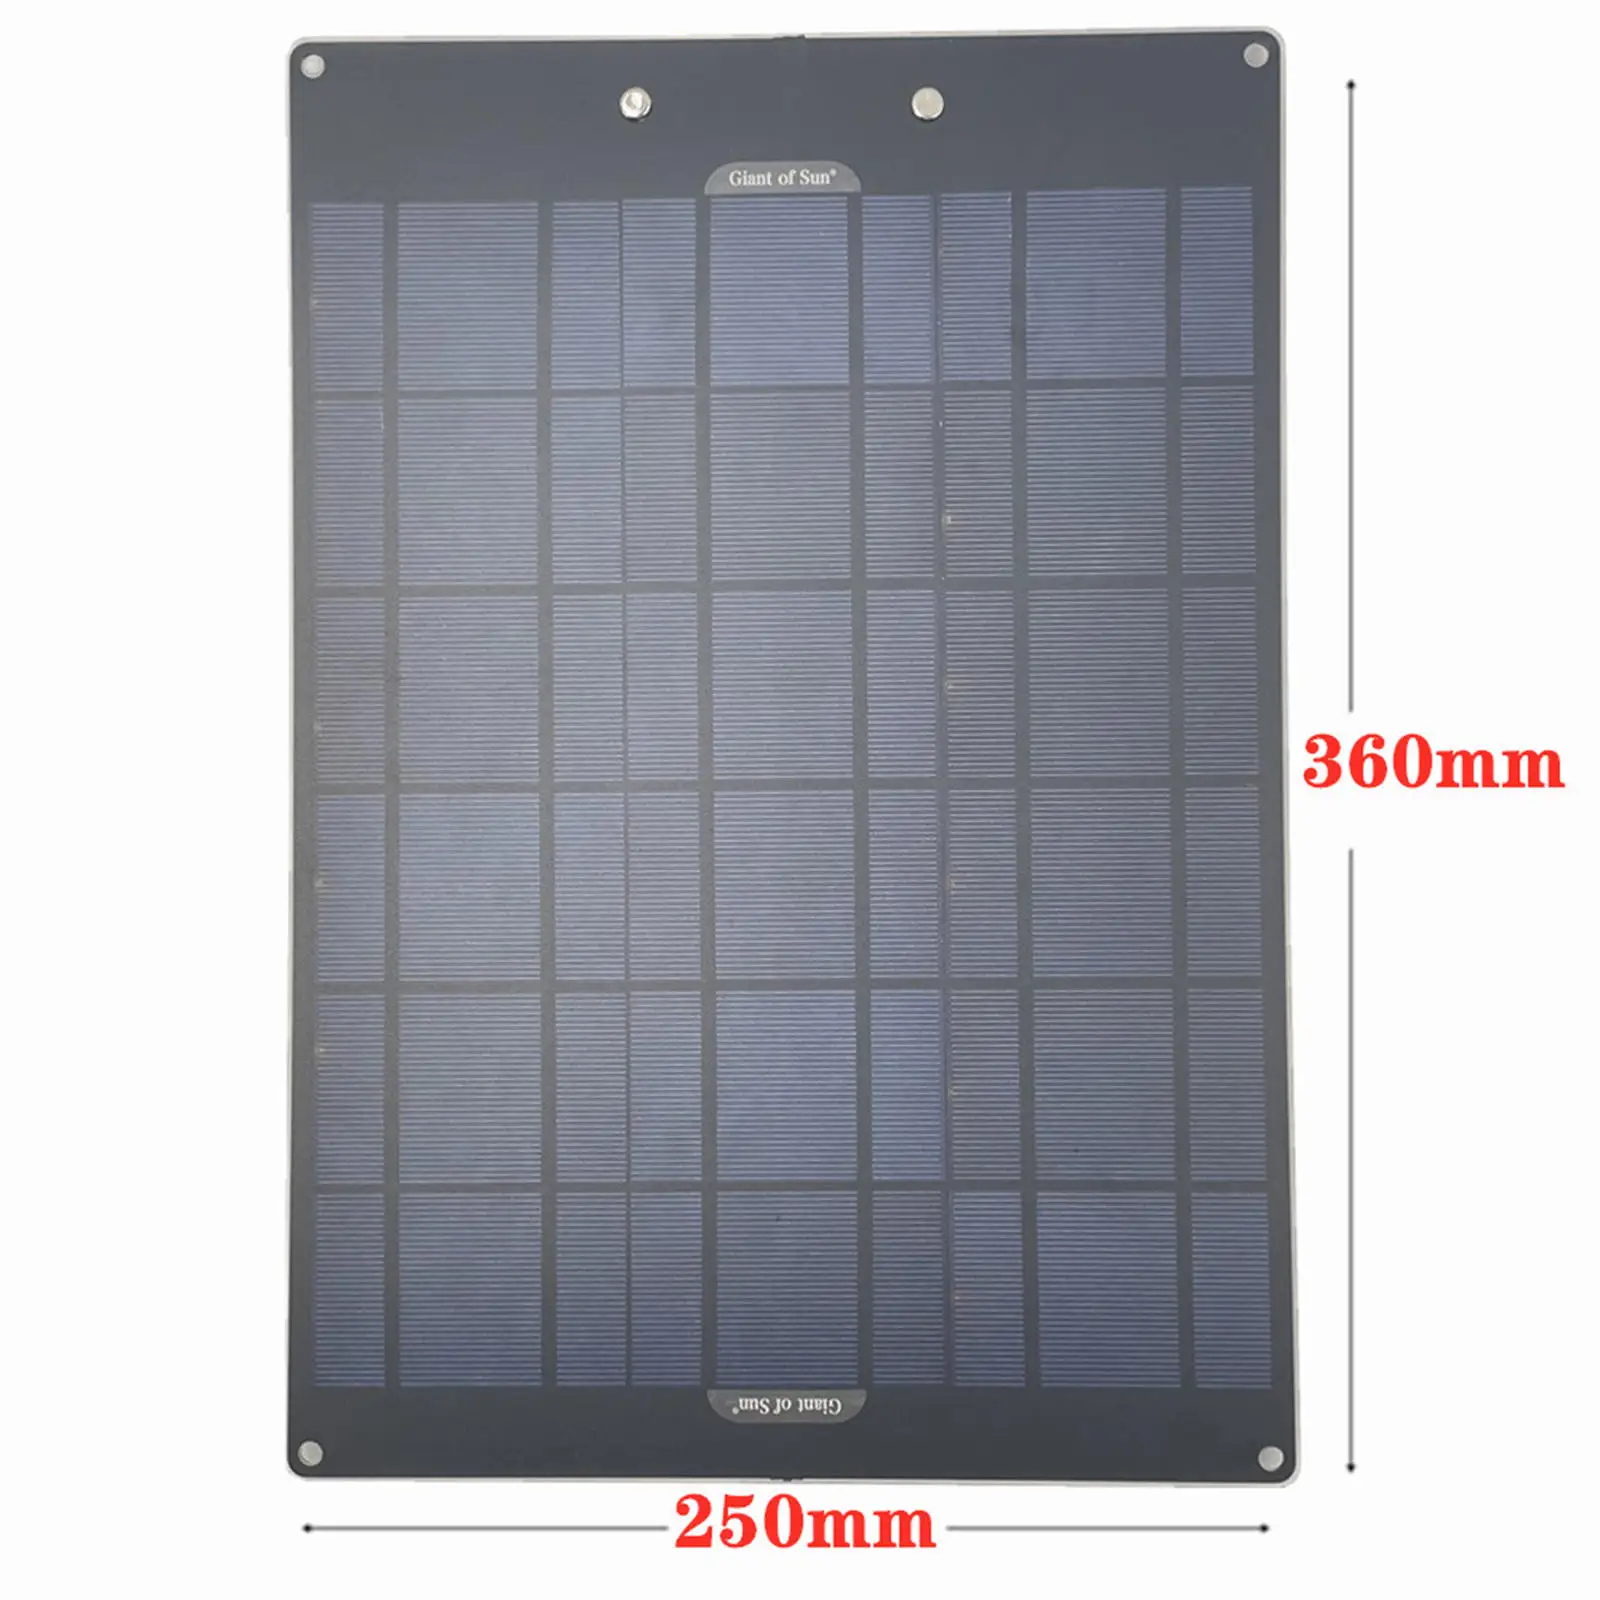 50W Watt Solar Panel 5V Charger for File Folder  Stationery Supplies